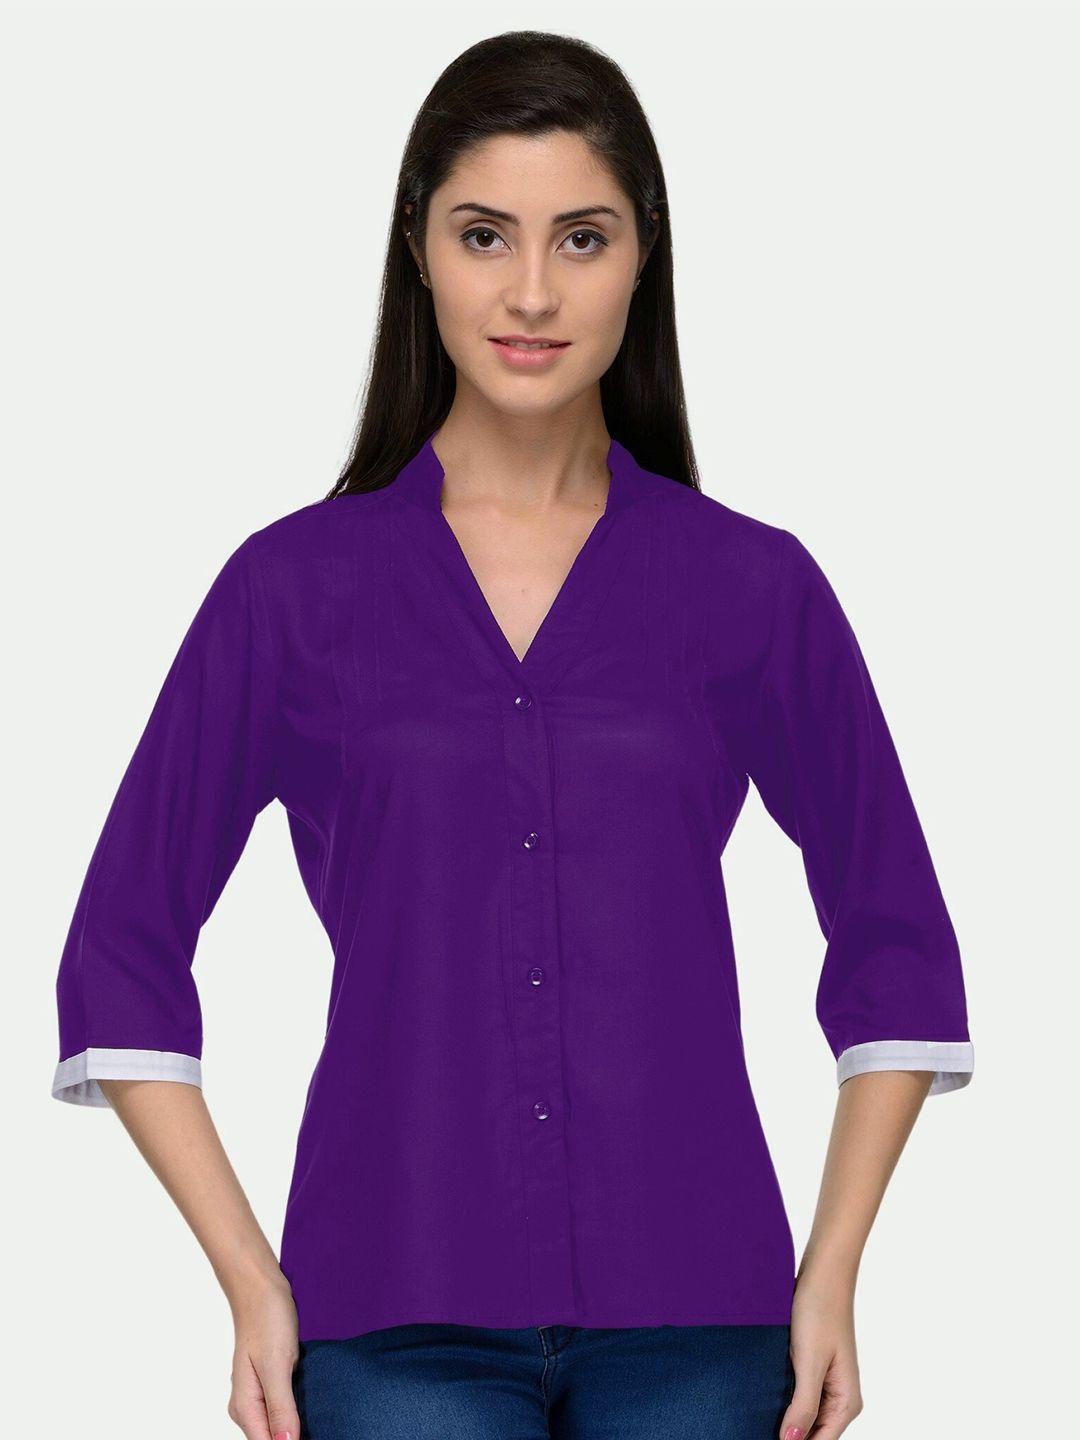 patrorna-plus-size-women-purple-comfort-casual-shirt